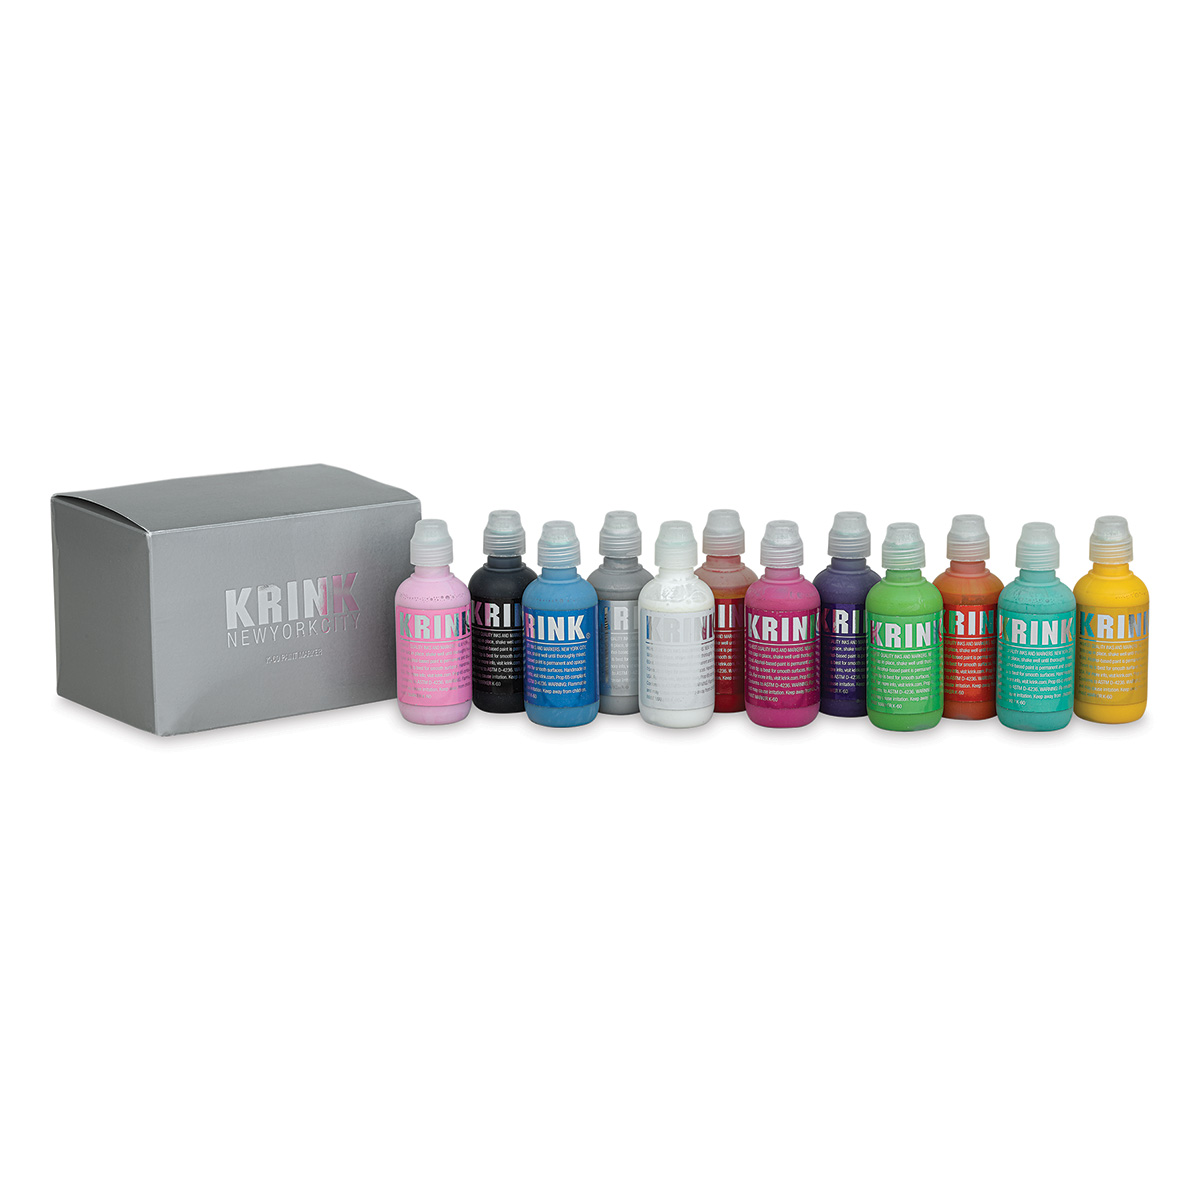 Krink K-60 Dabber Paint Marker Box Set of 6, 60ml Assorted